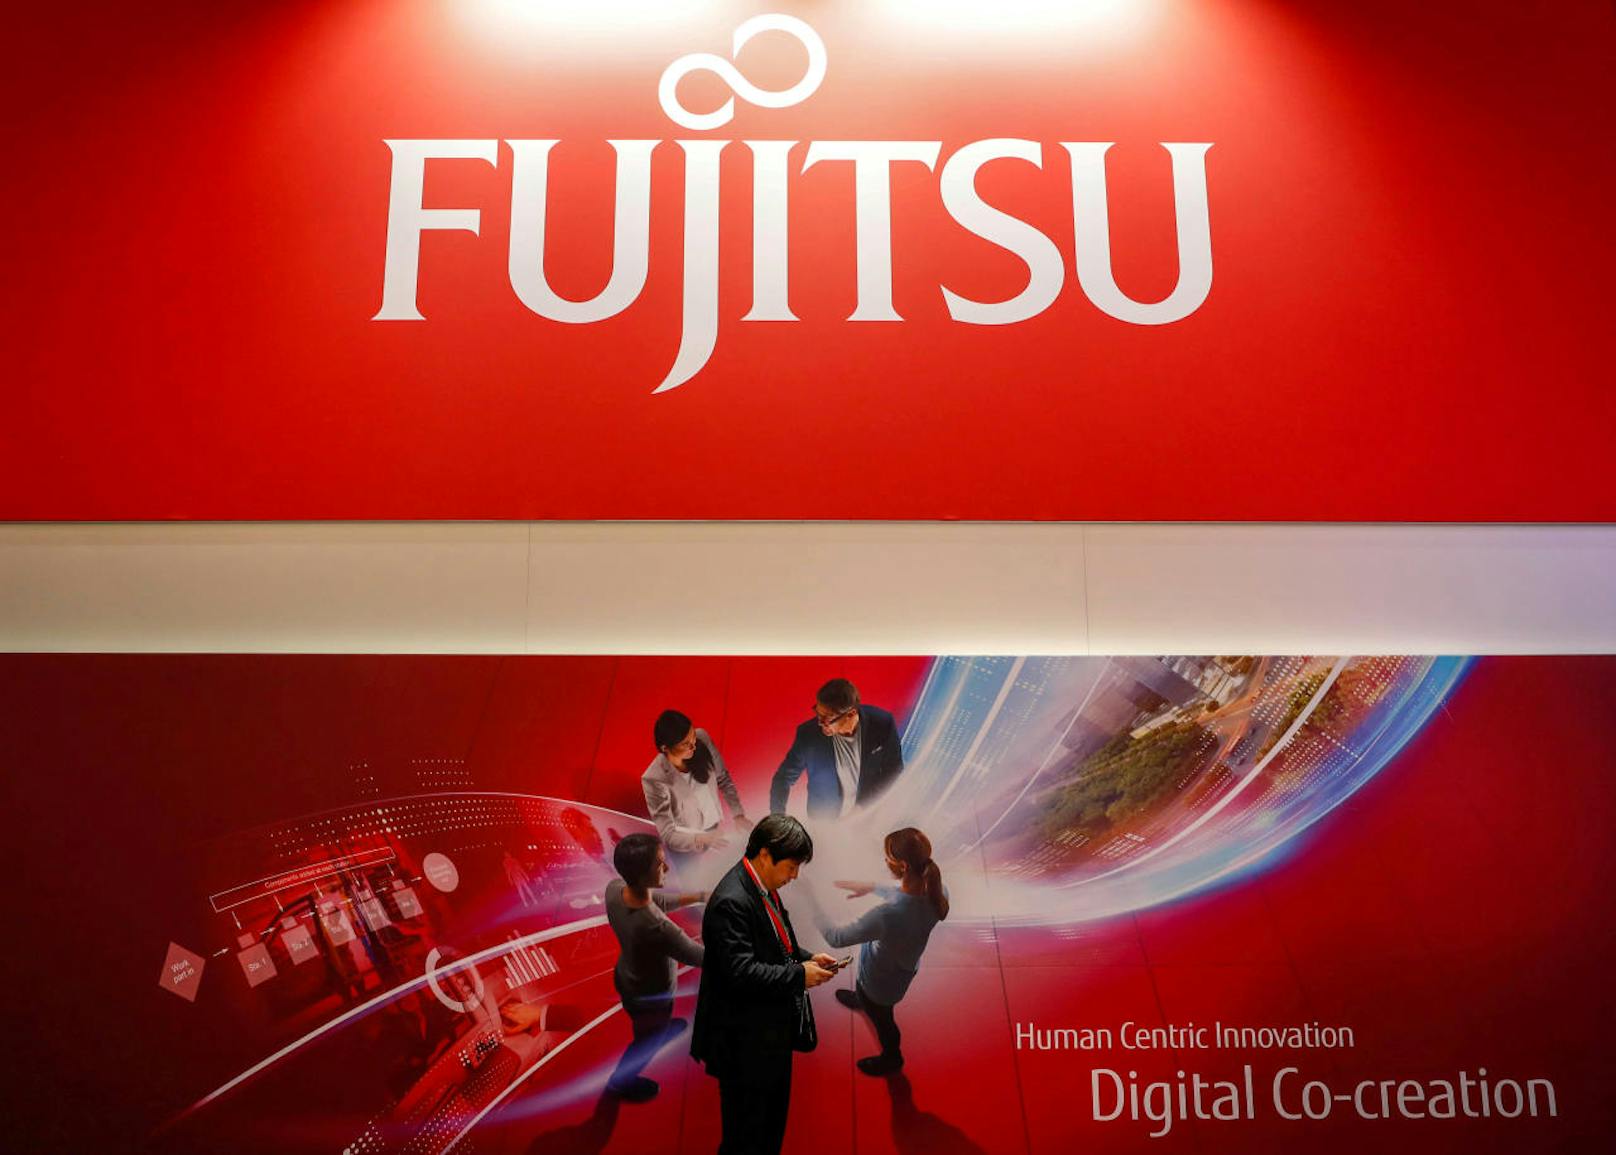 Mit dem Fujitsu Tablet <a href="https://www.fujitsu.com/de/products/computing/pc/tablets/stylistic-q5010/index.html">Stylistic Q5010</a> präsentiert Fujitsu ein neues Mitglied der strapazierfähigen Stylistic Tablet-Reihe.